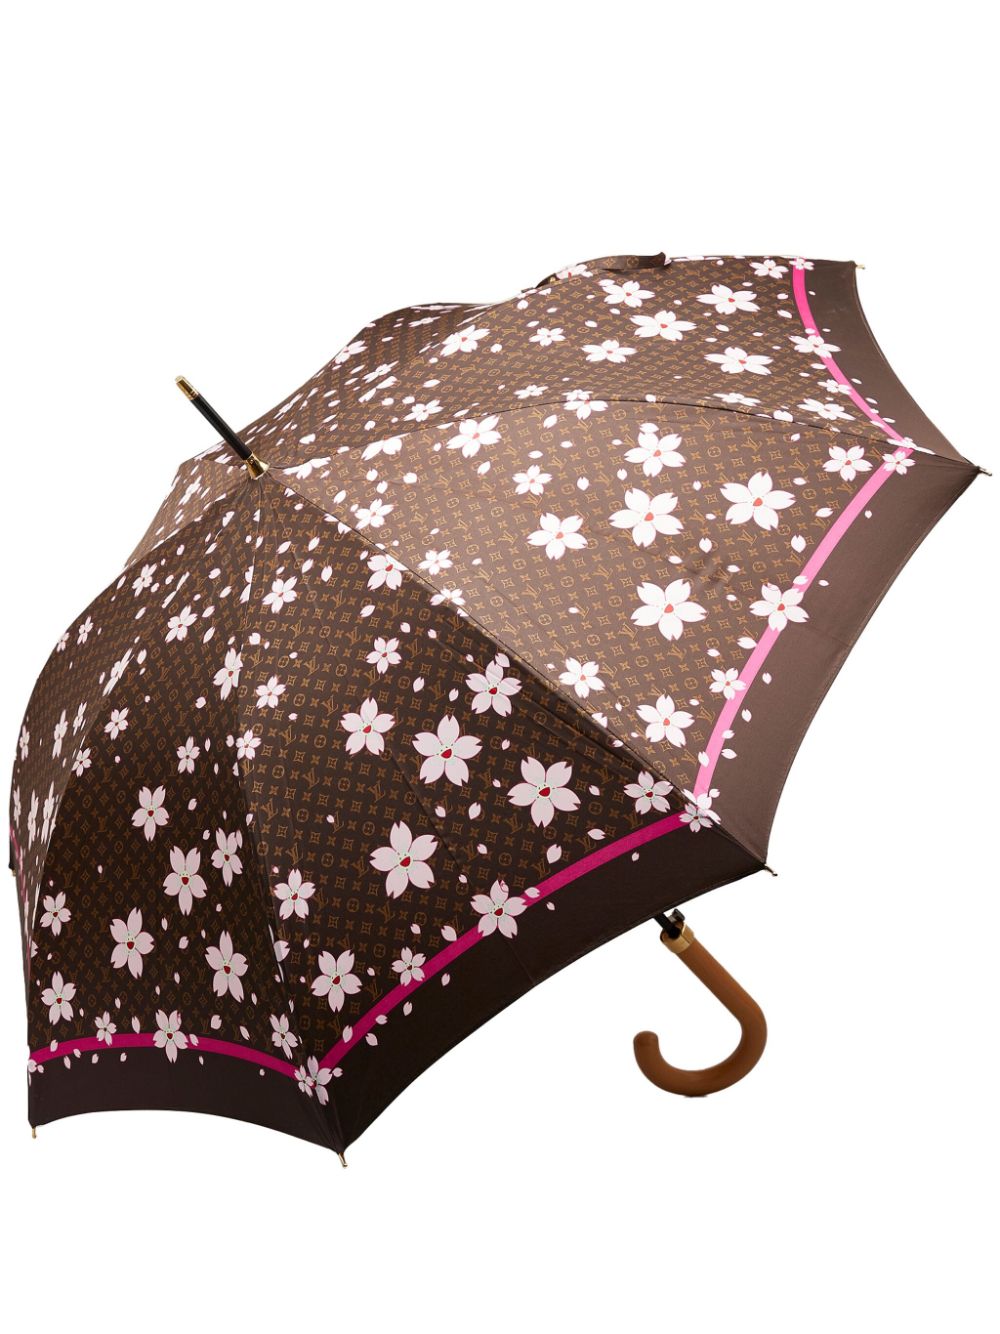 Authentic Louis Vuitton Monogram Parapluie Umbrella Cherry Blossom Black  Pink